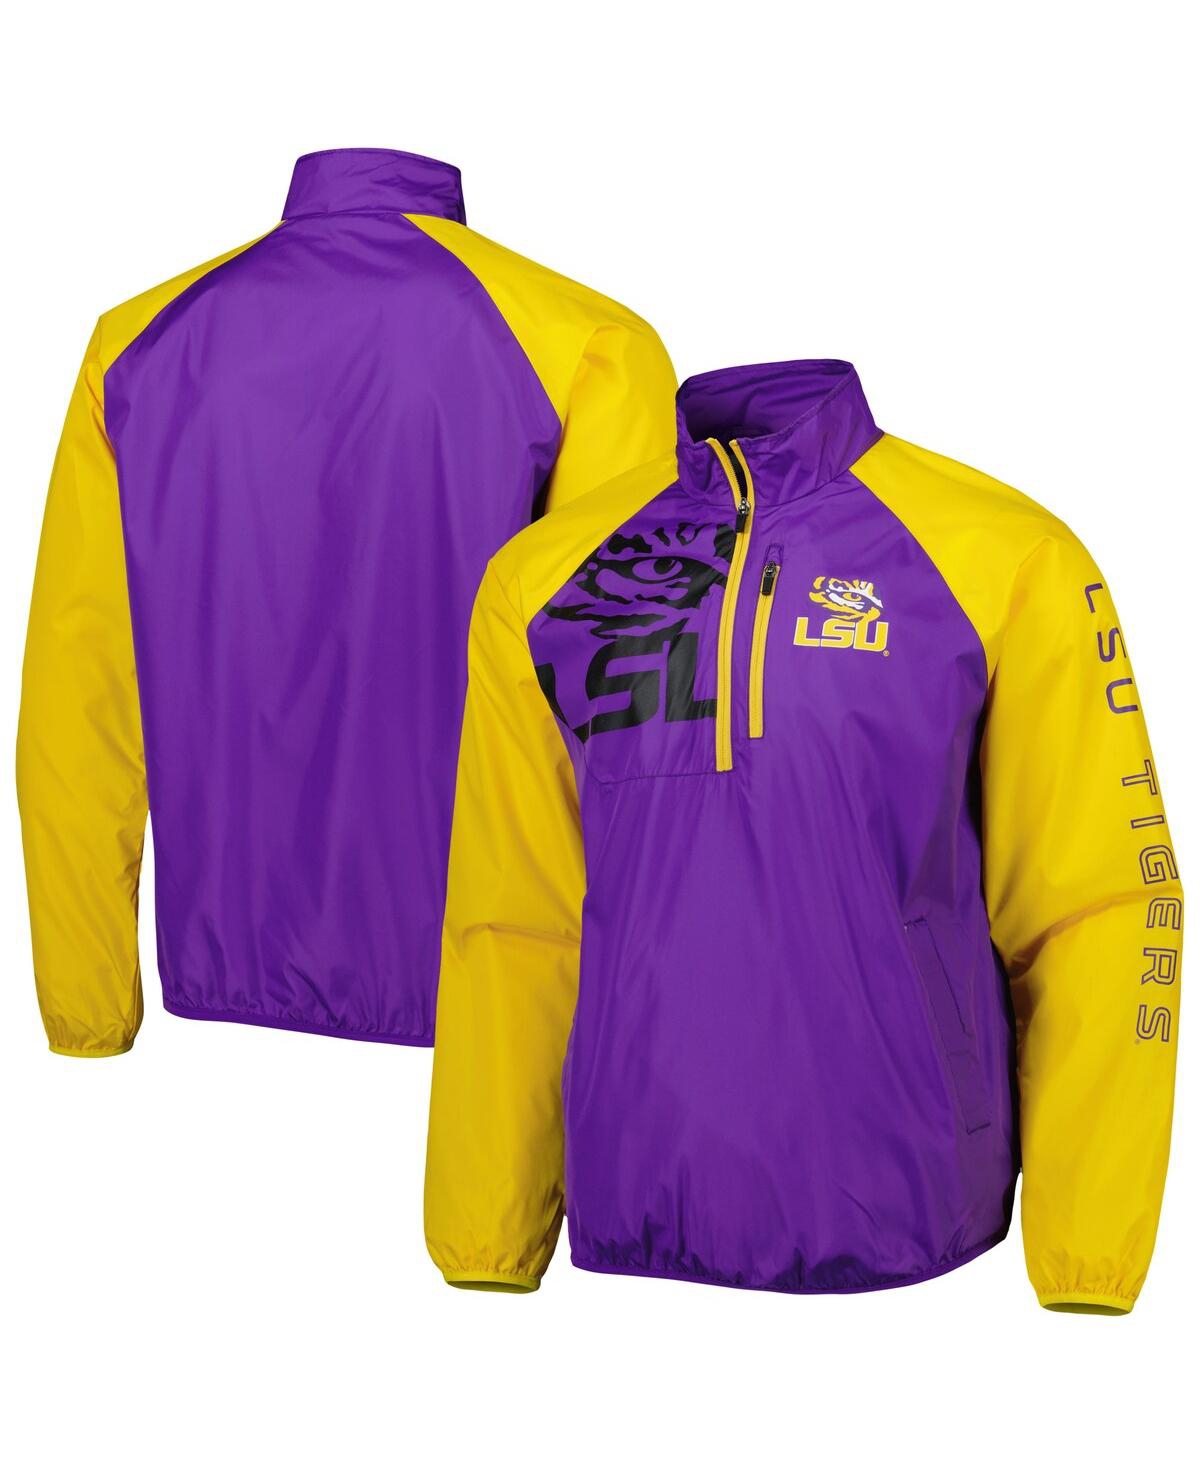 Men's G-iii Sports by Carl Banks Purple, Yellow Lsu Tigers Point Guard Raglan Half-Zip Jacket - Purple, Yellow